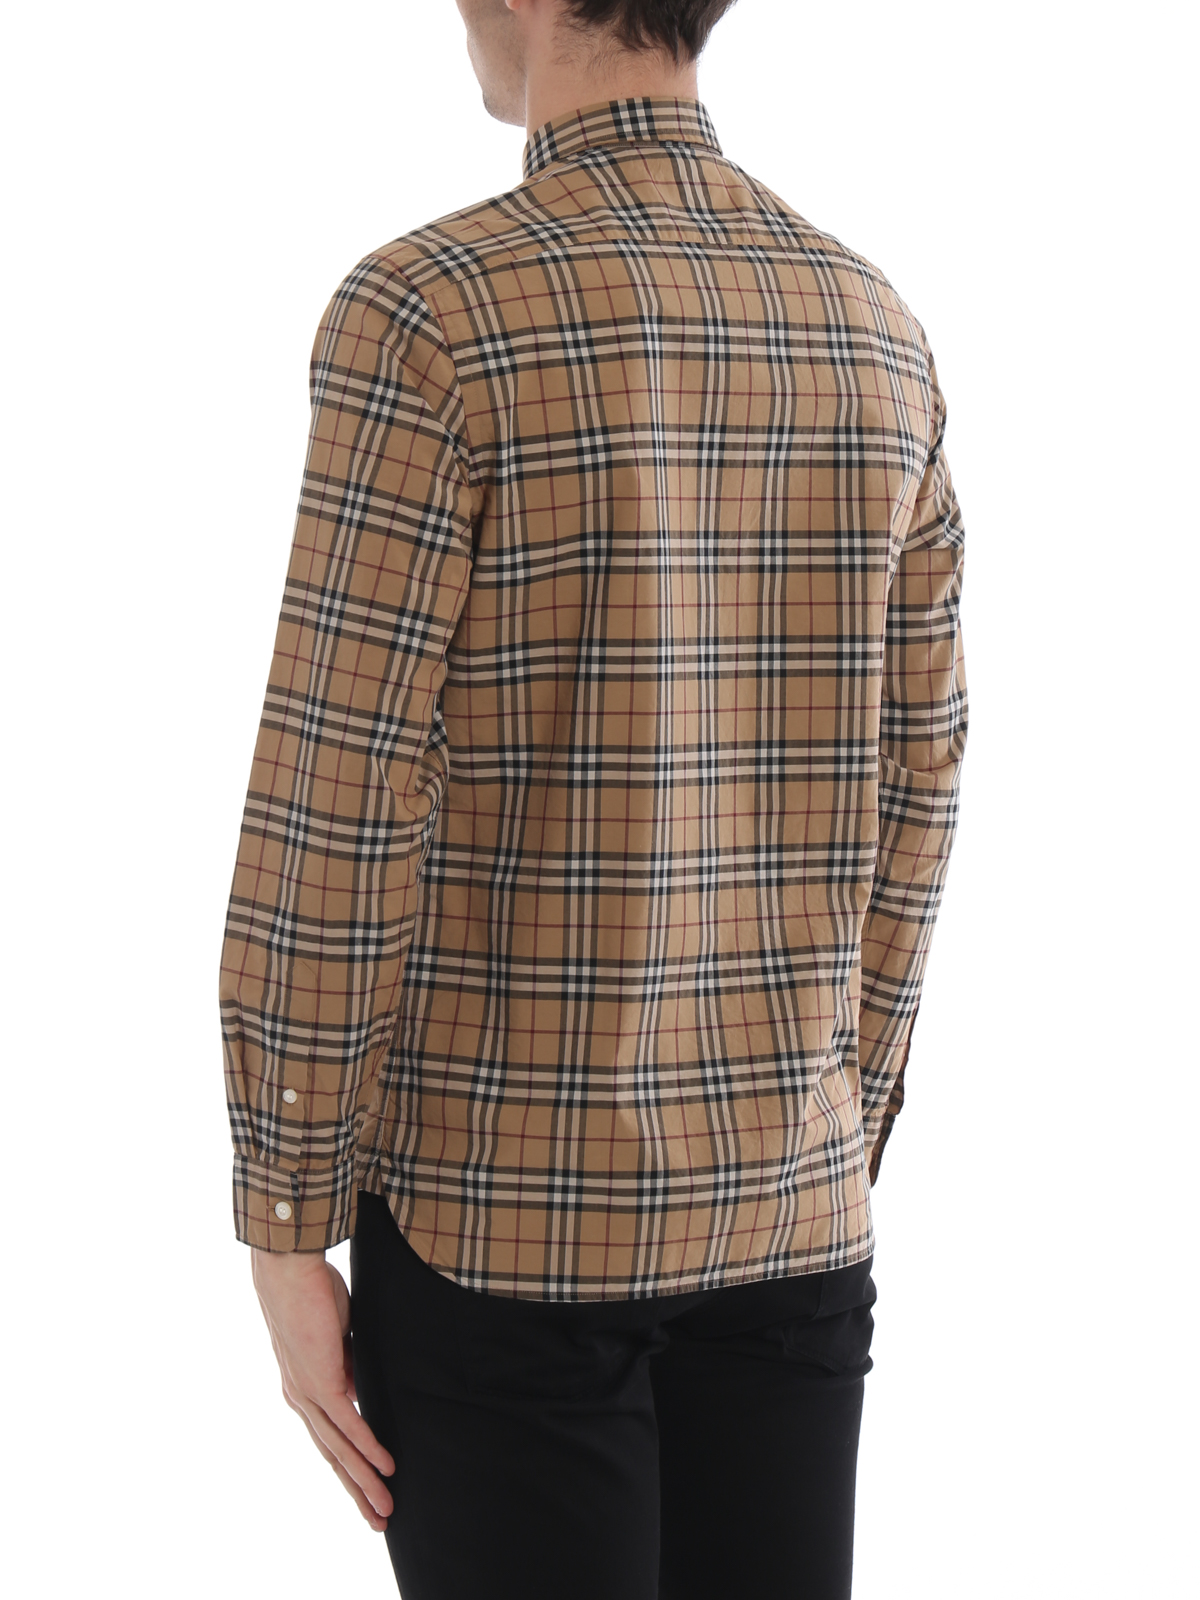 Burberry - Alexander Check cotton shirt 